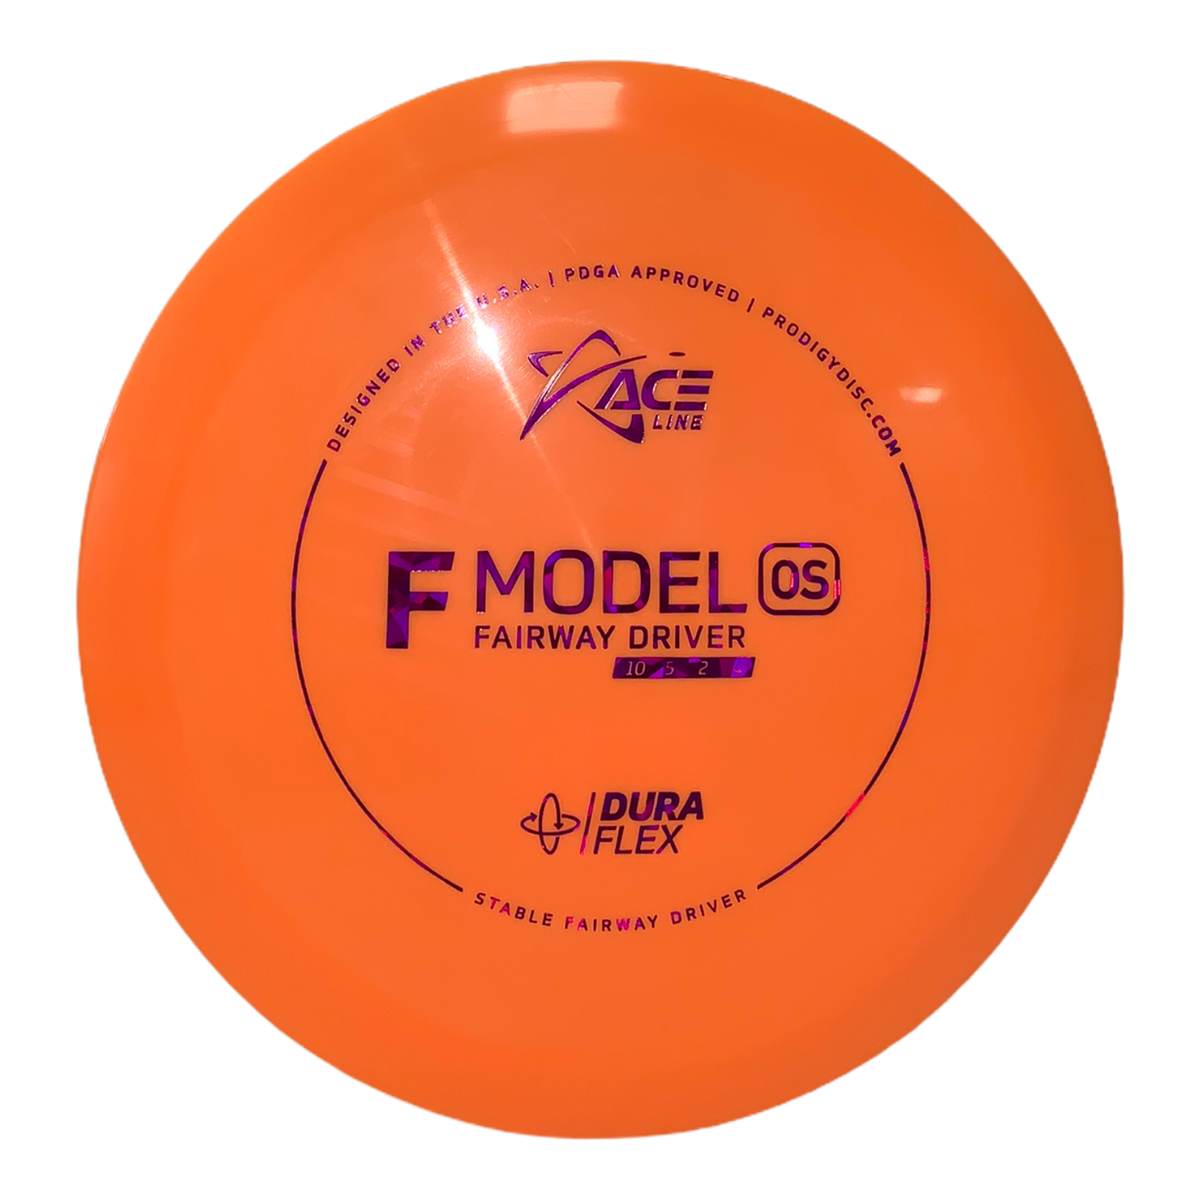 Prodigy Ace Line Duraflex F Model OS